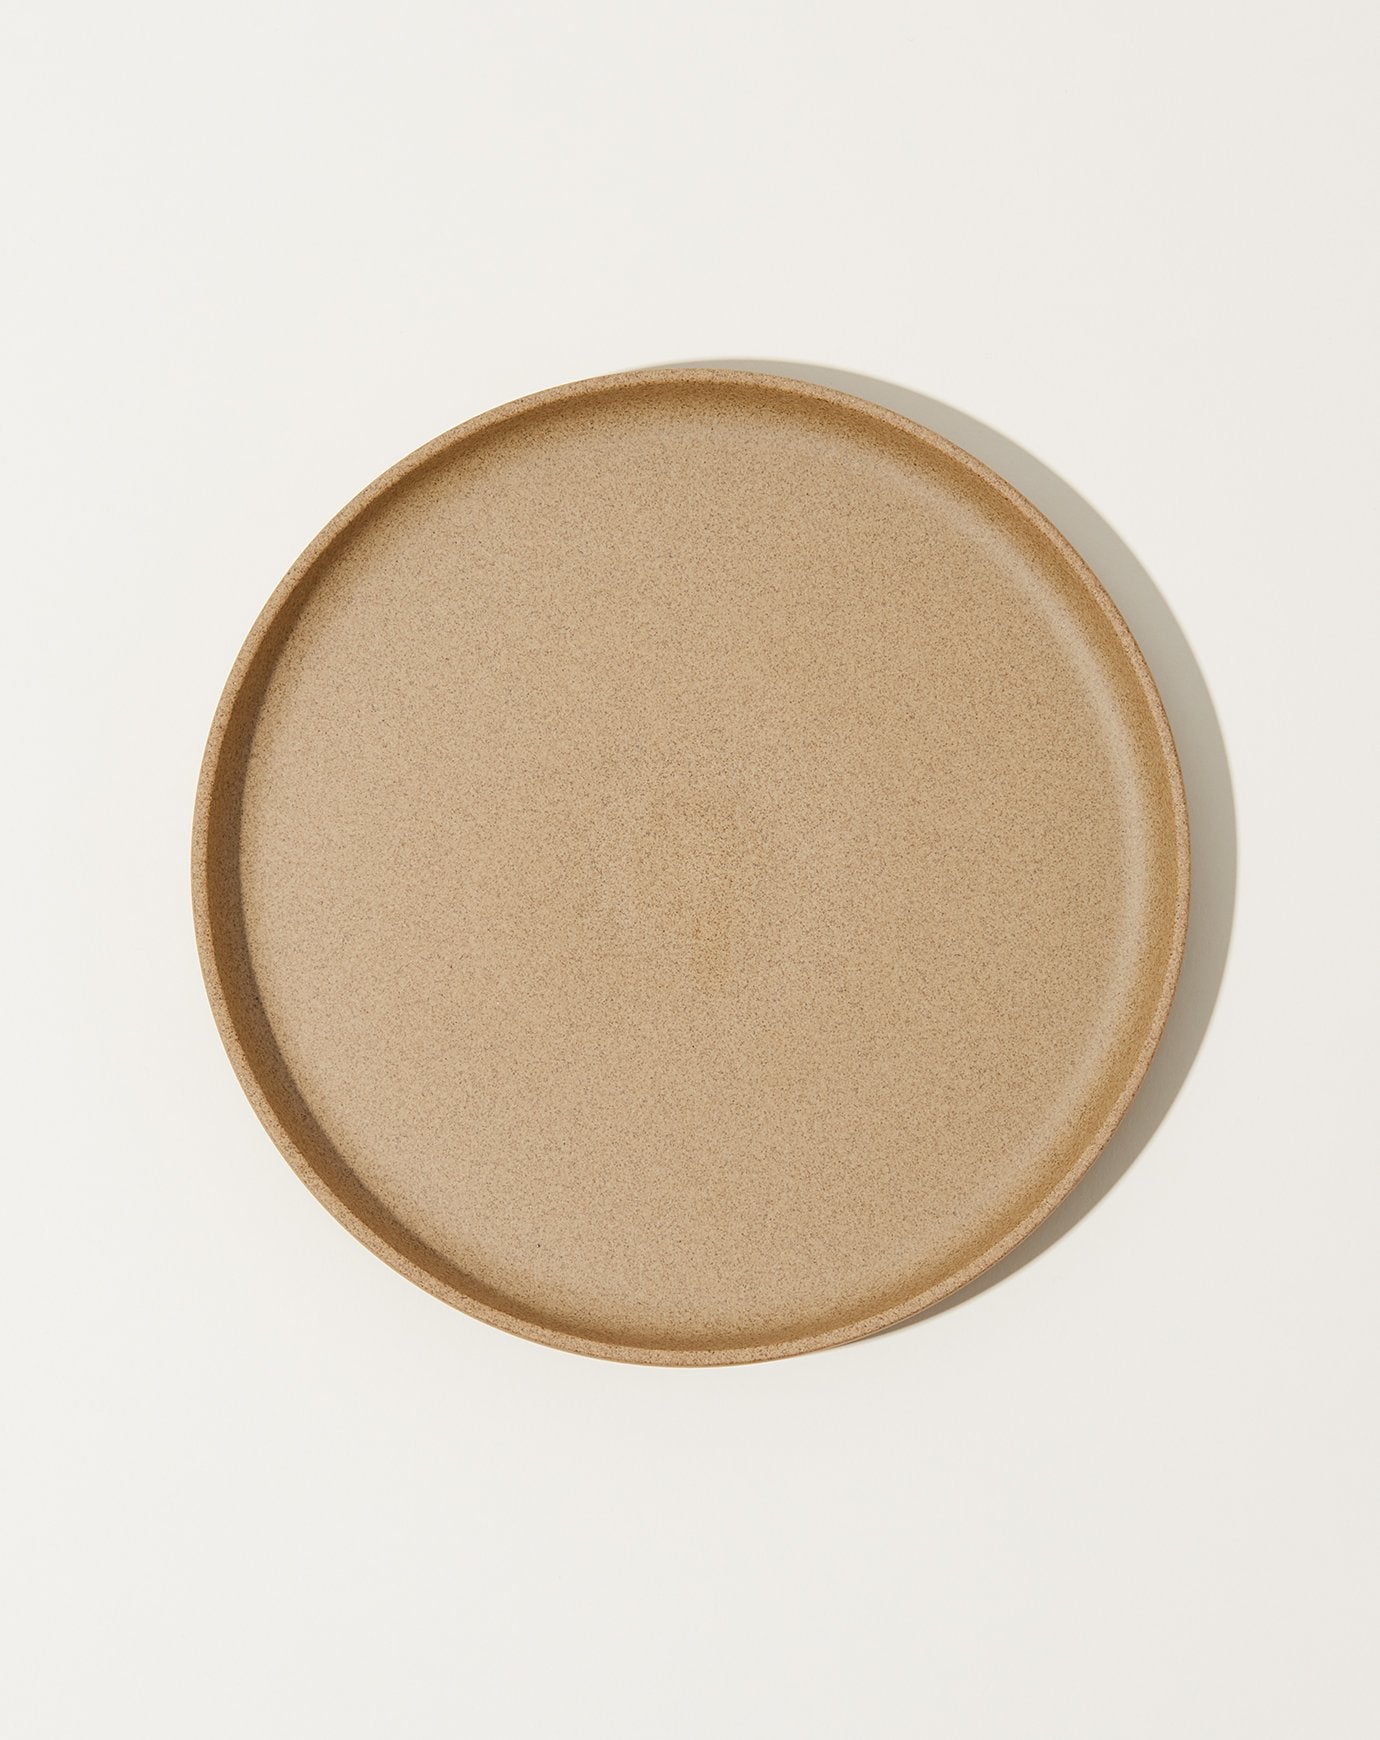 Hasami Porcelain Plate in Natural